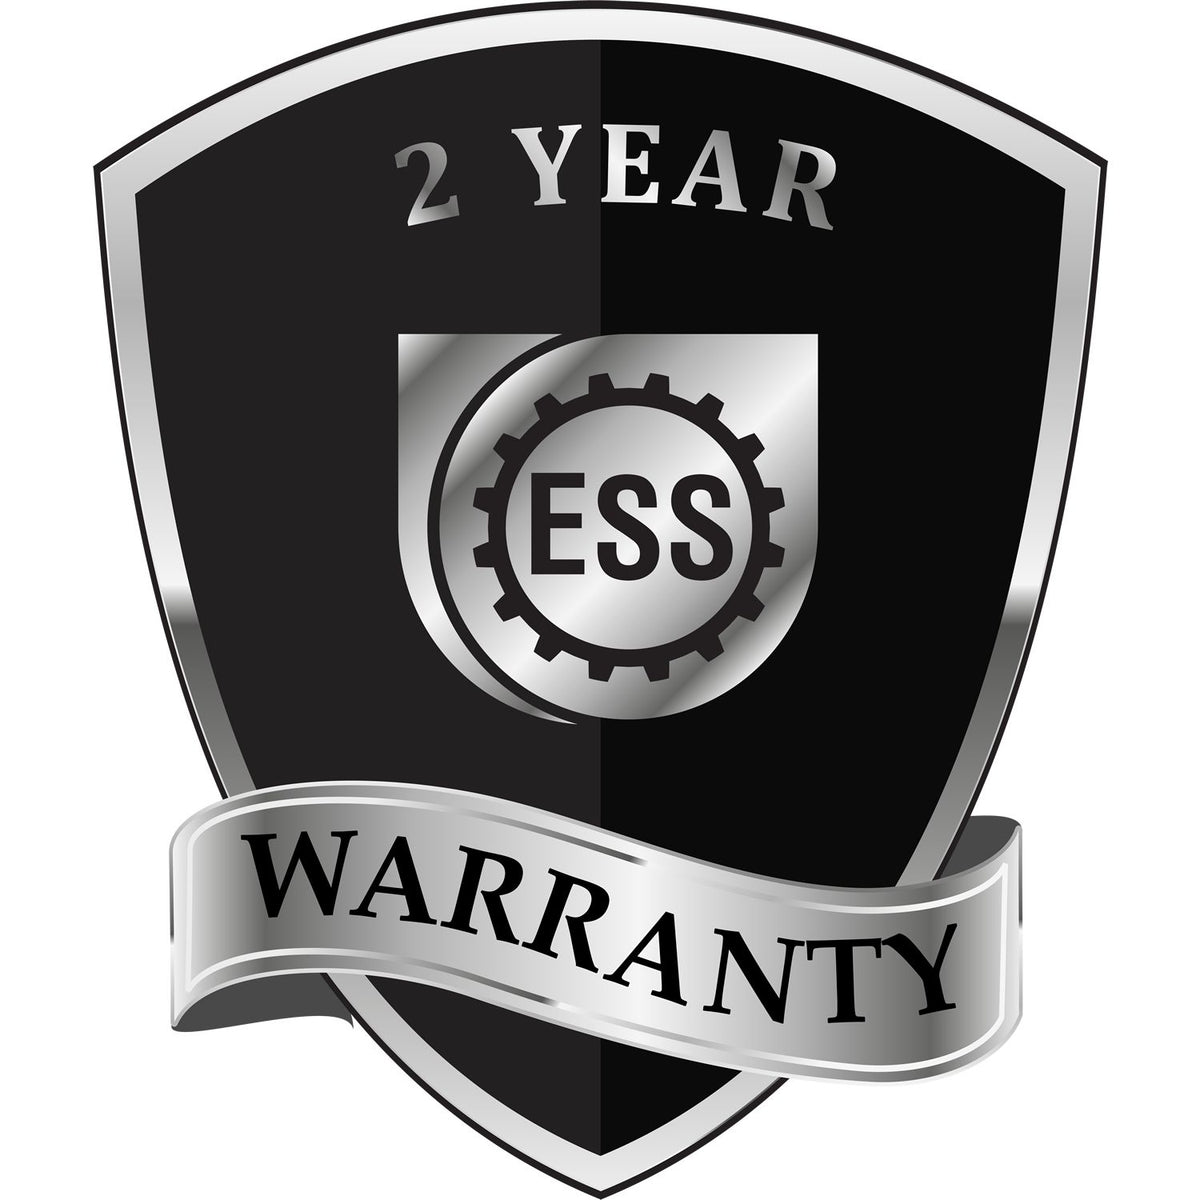 A black and silver badge or emblem showing warranty information for the Hybrid South Carolina Land Surveyor Seal